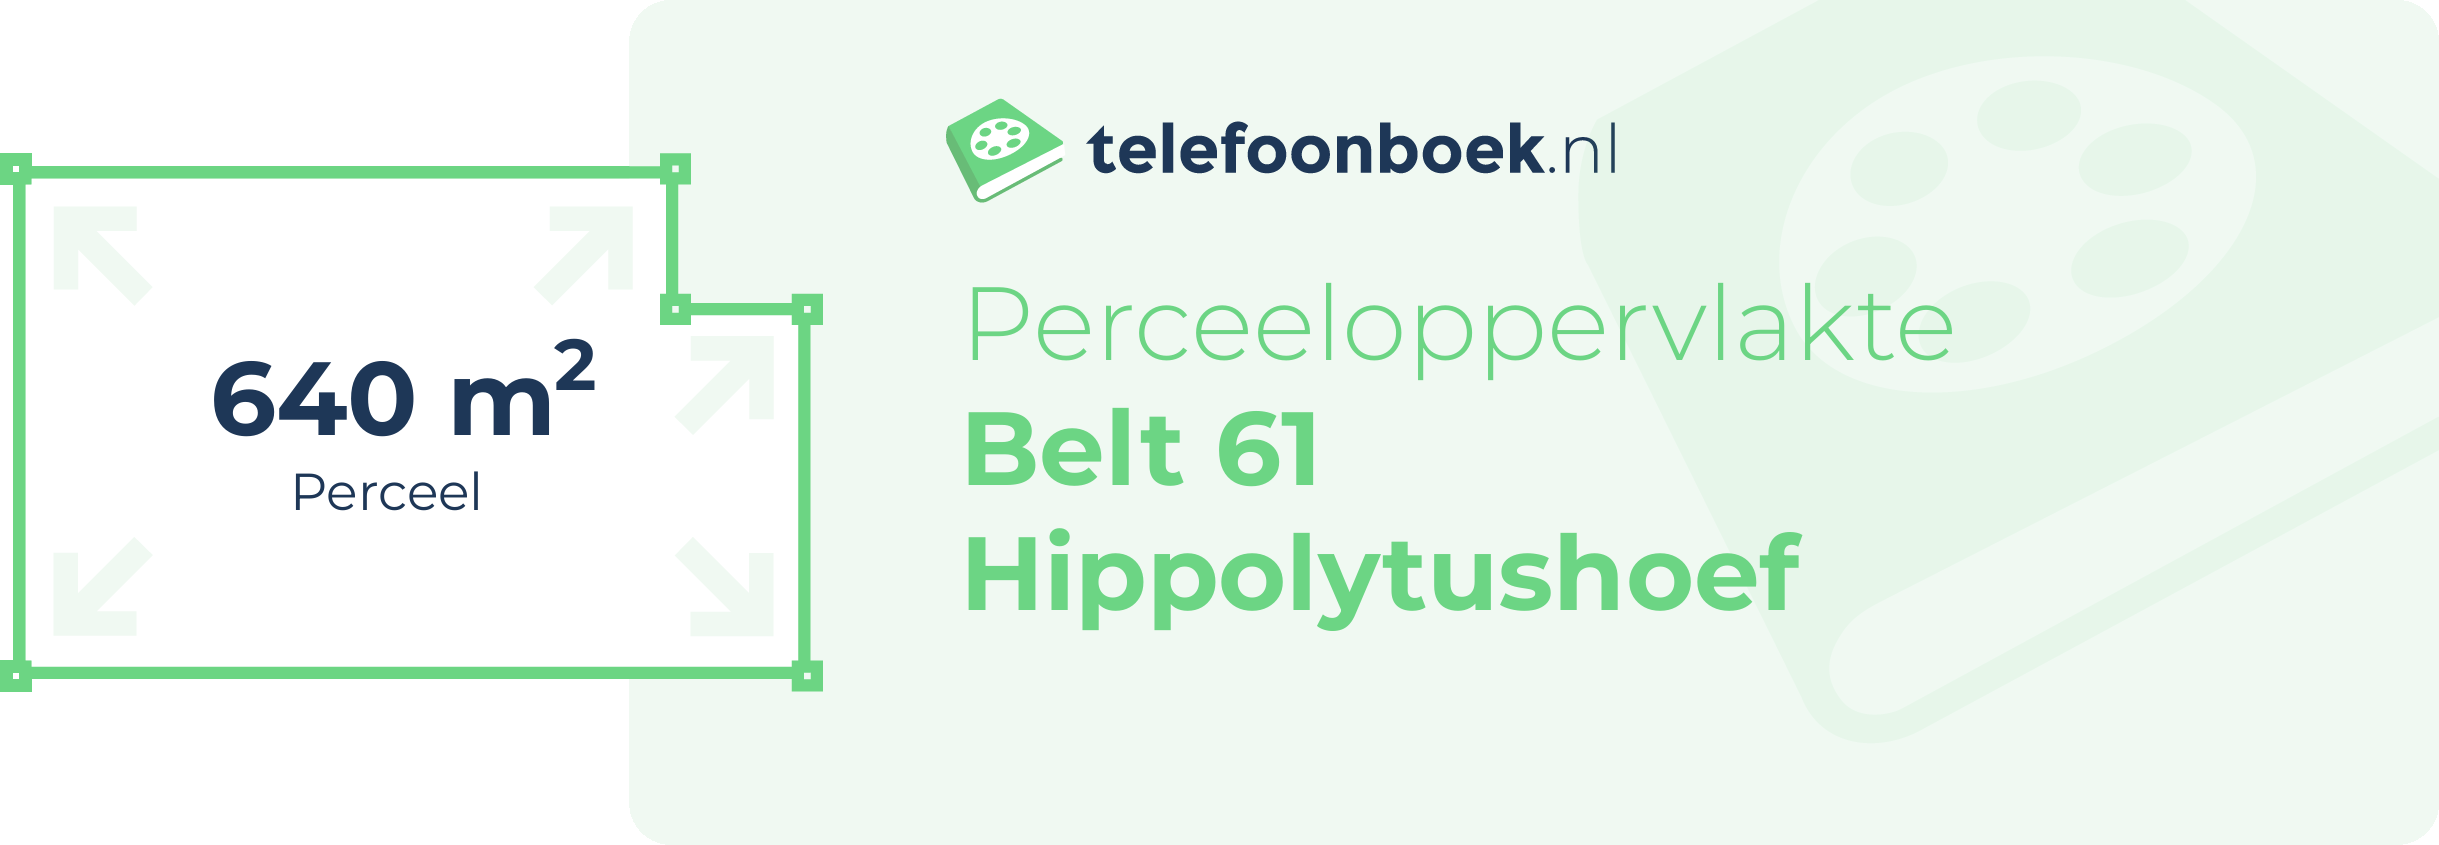 Perceeloppervlakte Belt 61 Hippolytushoef